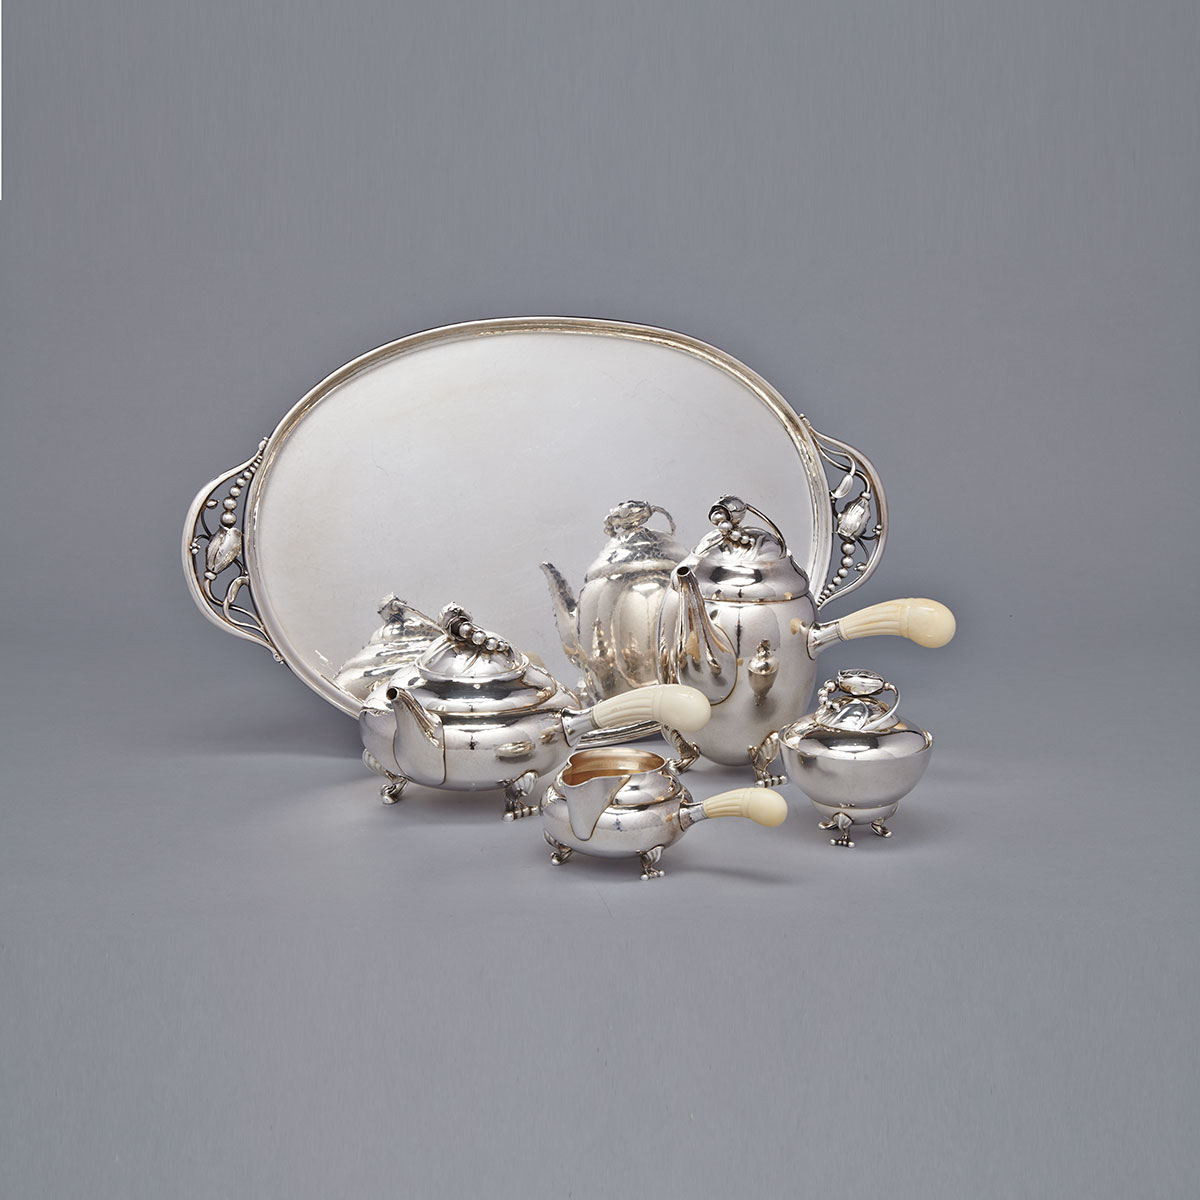 Danish Silver ‘Blossom’ Pattern Tea and Coffee Service with Tray, #2D and #2E, Georg Jensen, Copenhagen, 20th century